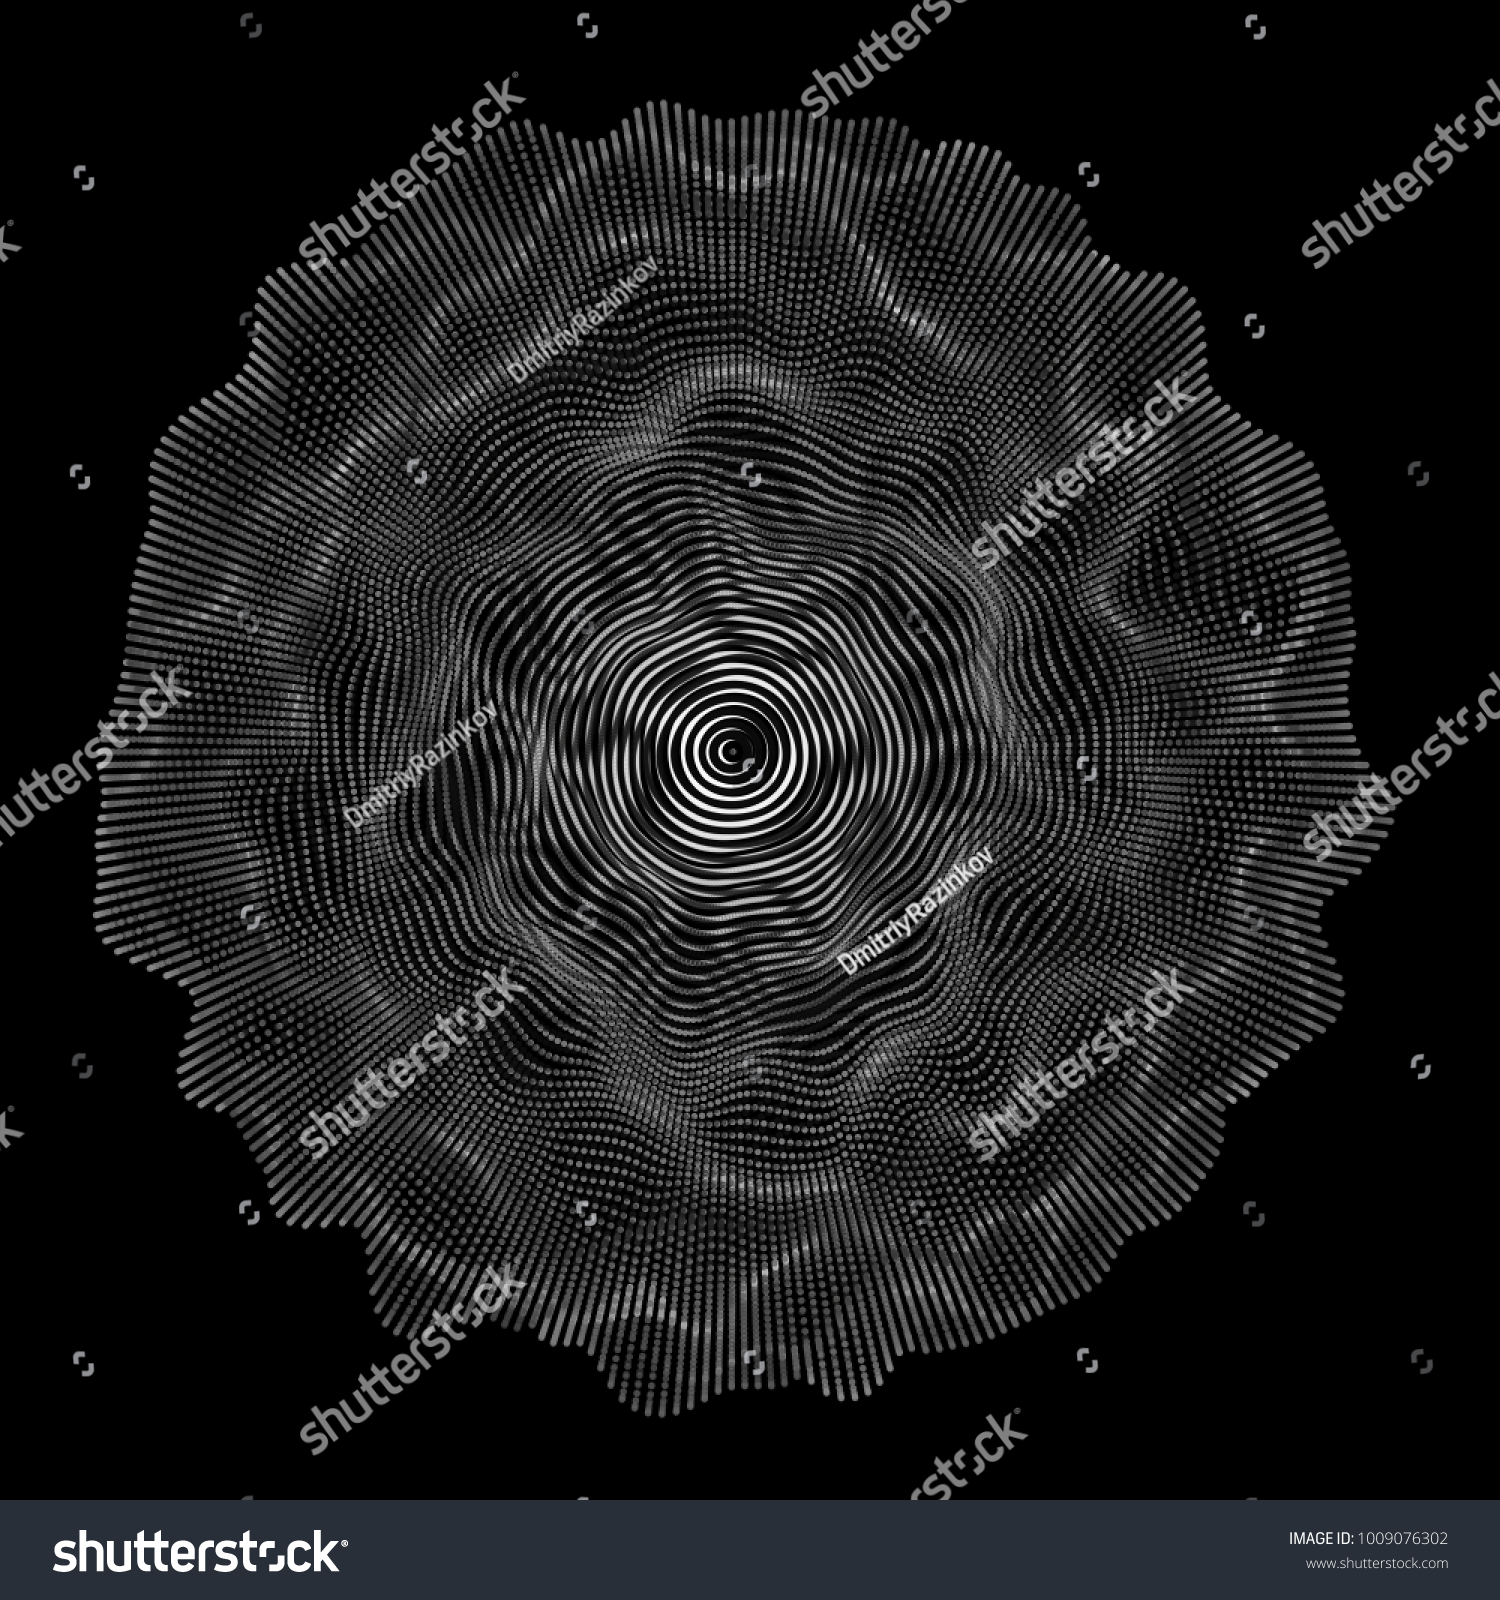 Vector Music background. Big Data Particle Flow Visualisation. Science infographic futuristic illustration. Sound wave. Sound visualization #1009076302